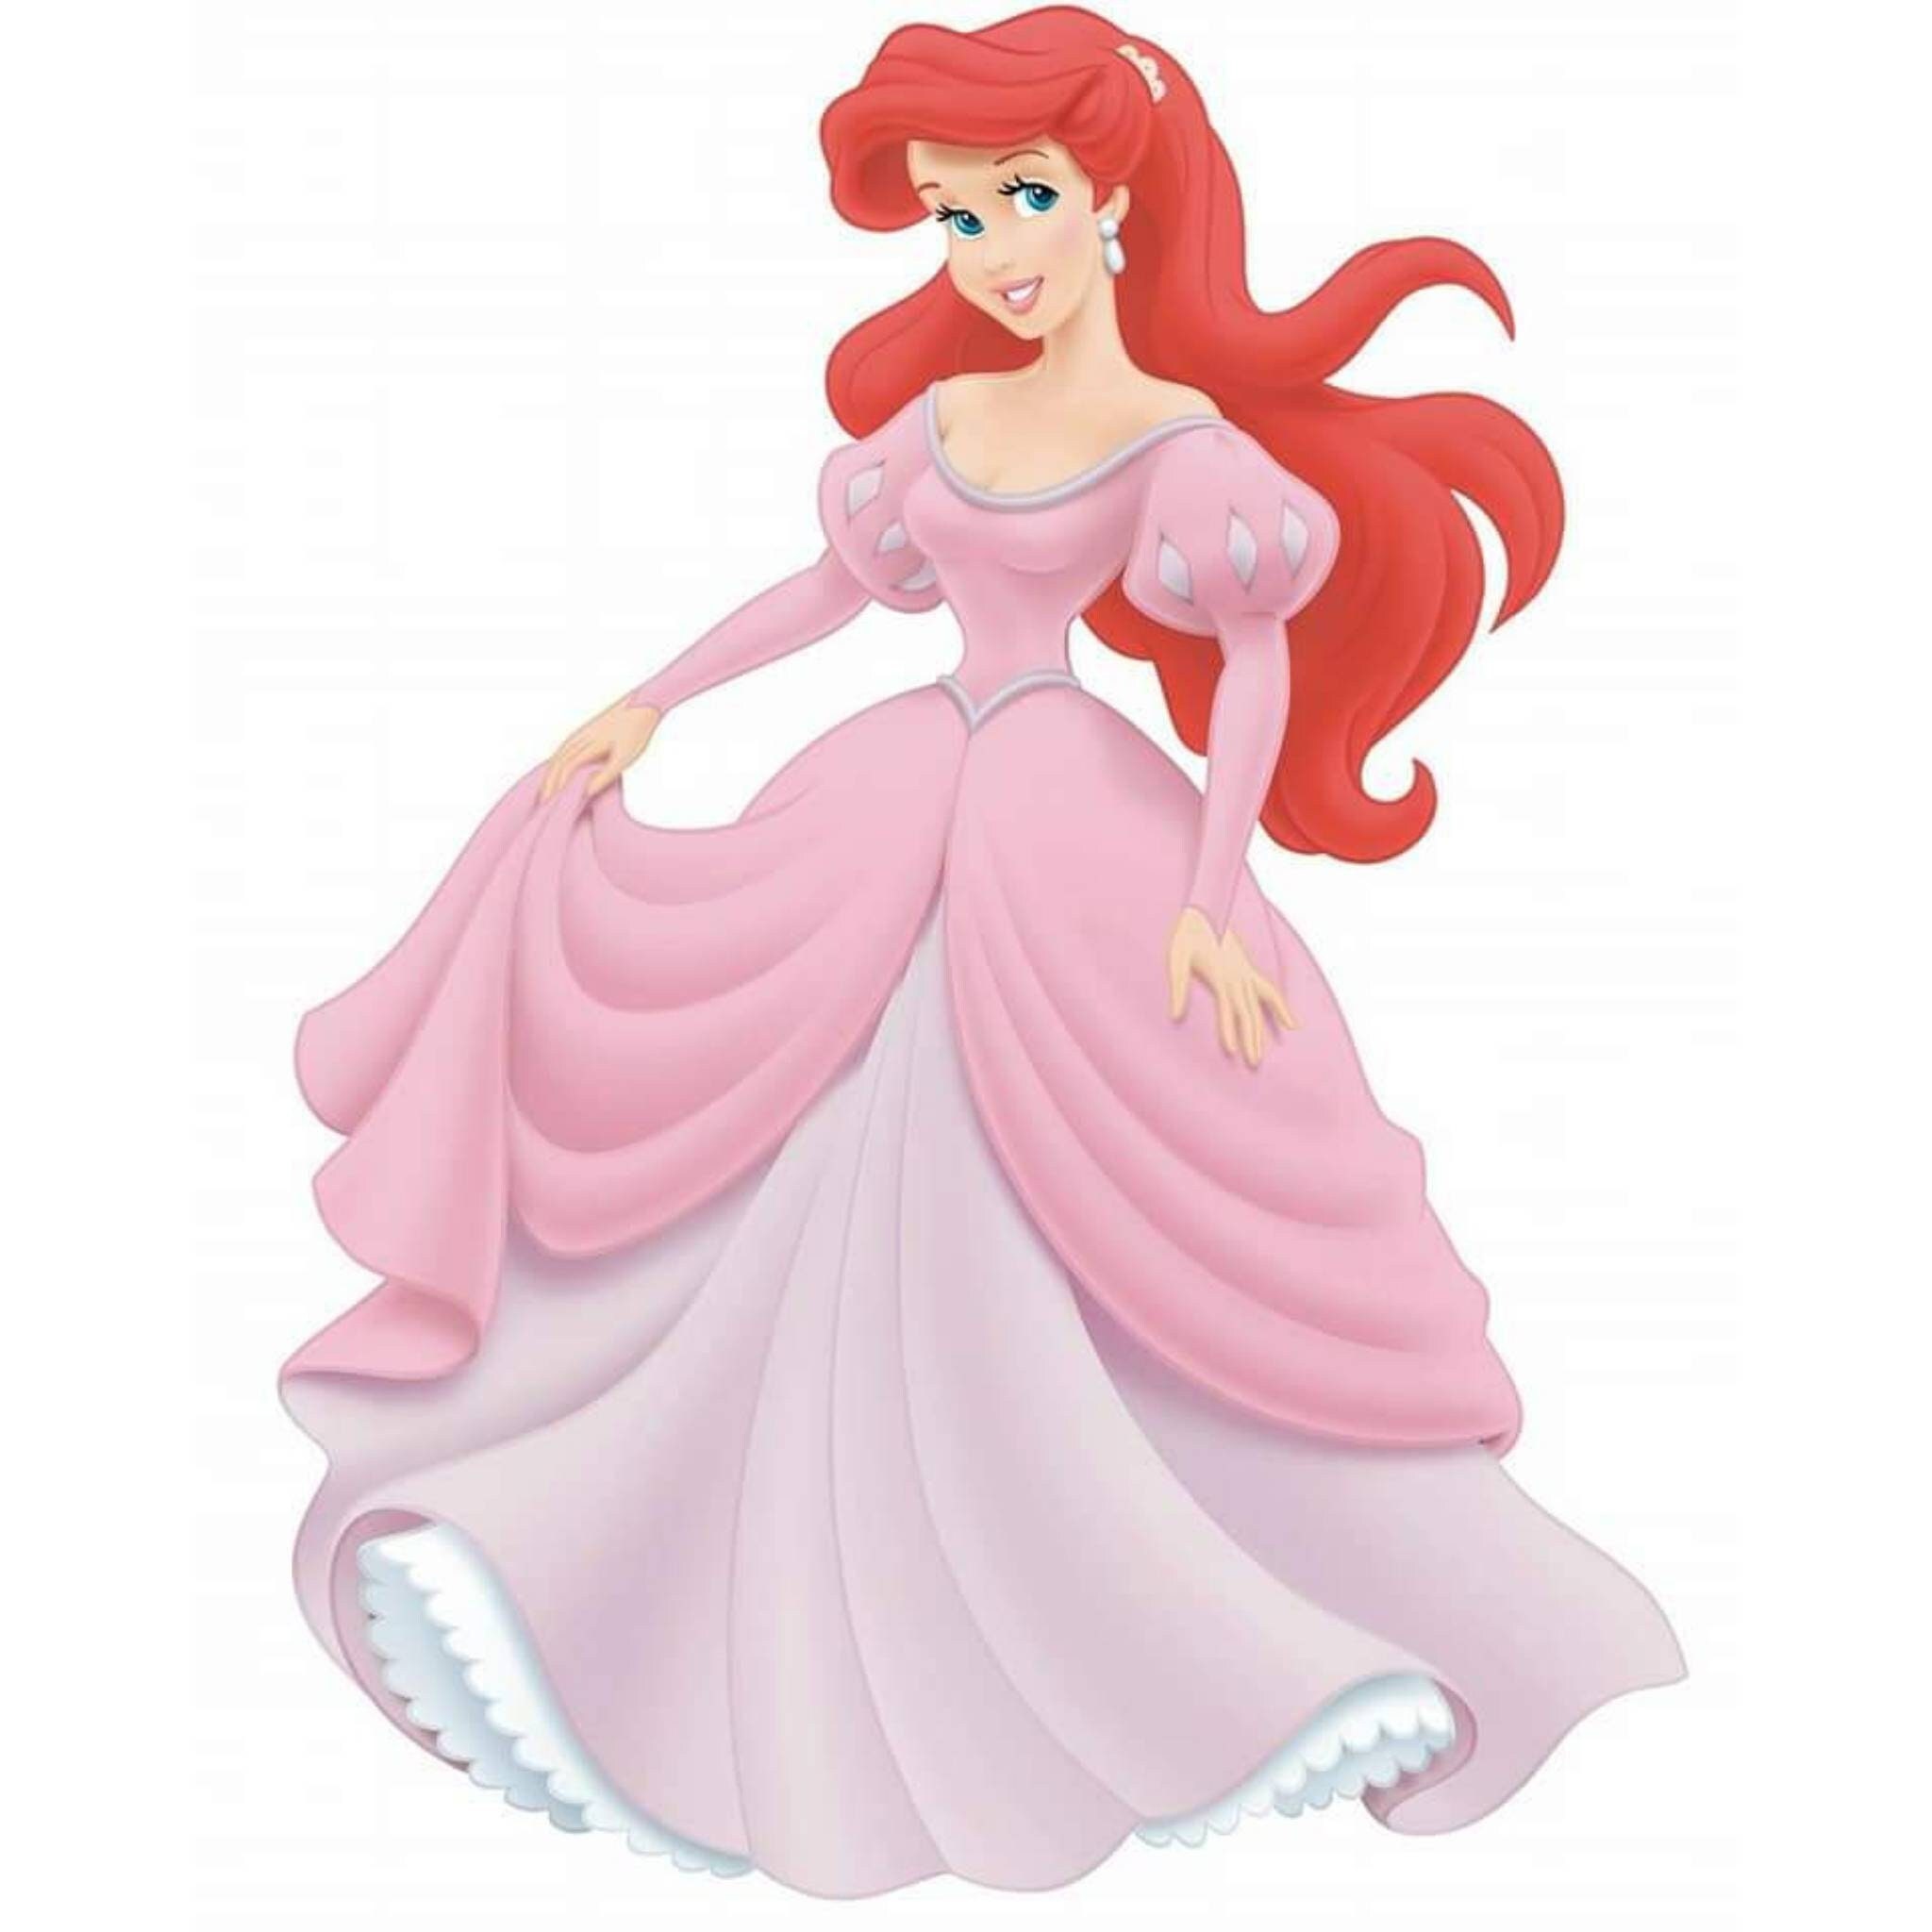 Ariel's pink dress - Etsy